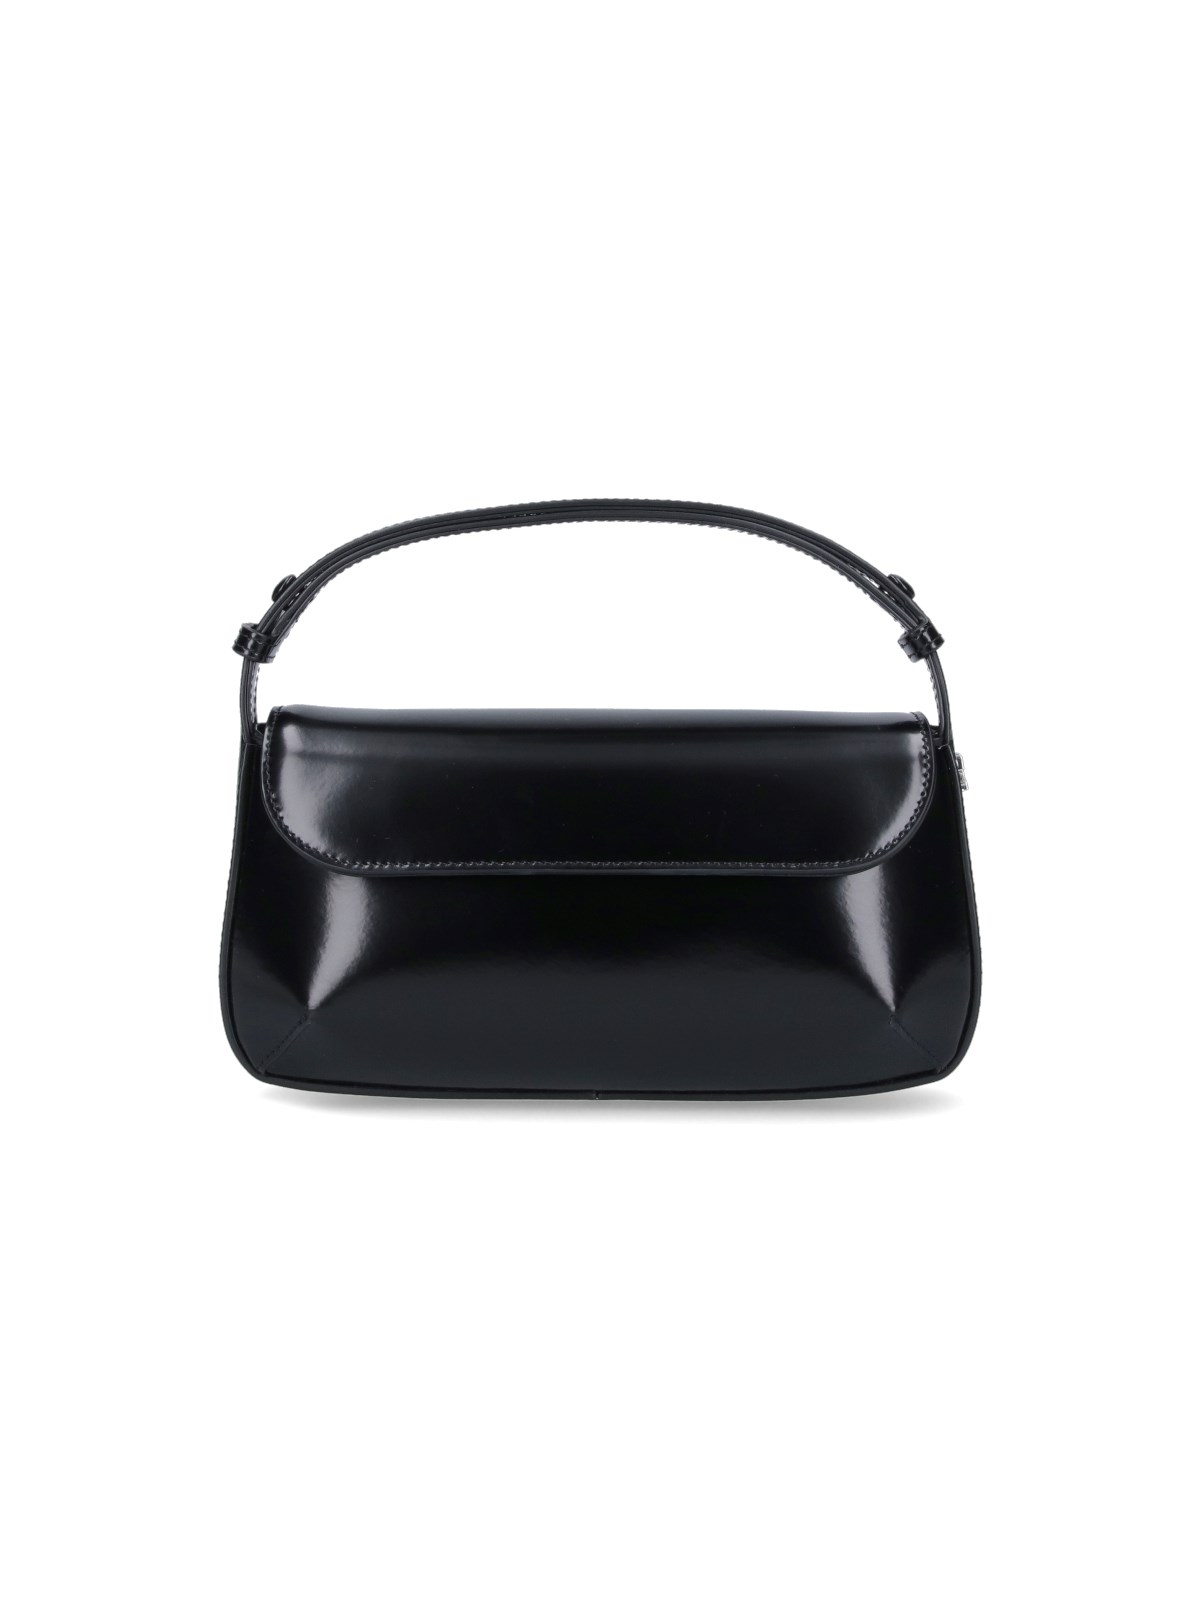 Courrèges Black Leather Sleek Handbag In Black  